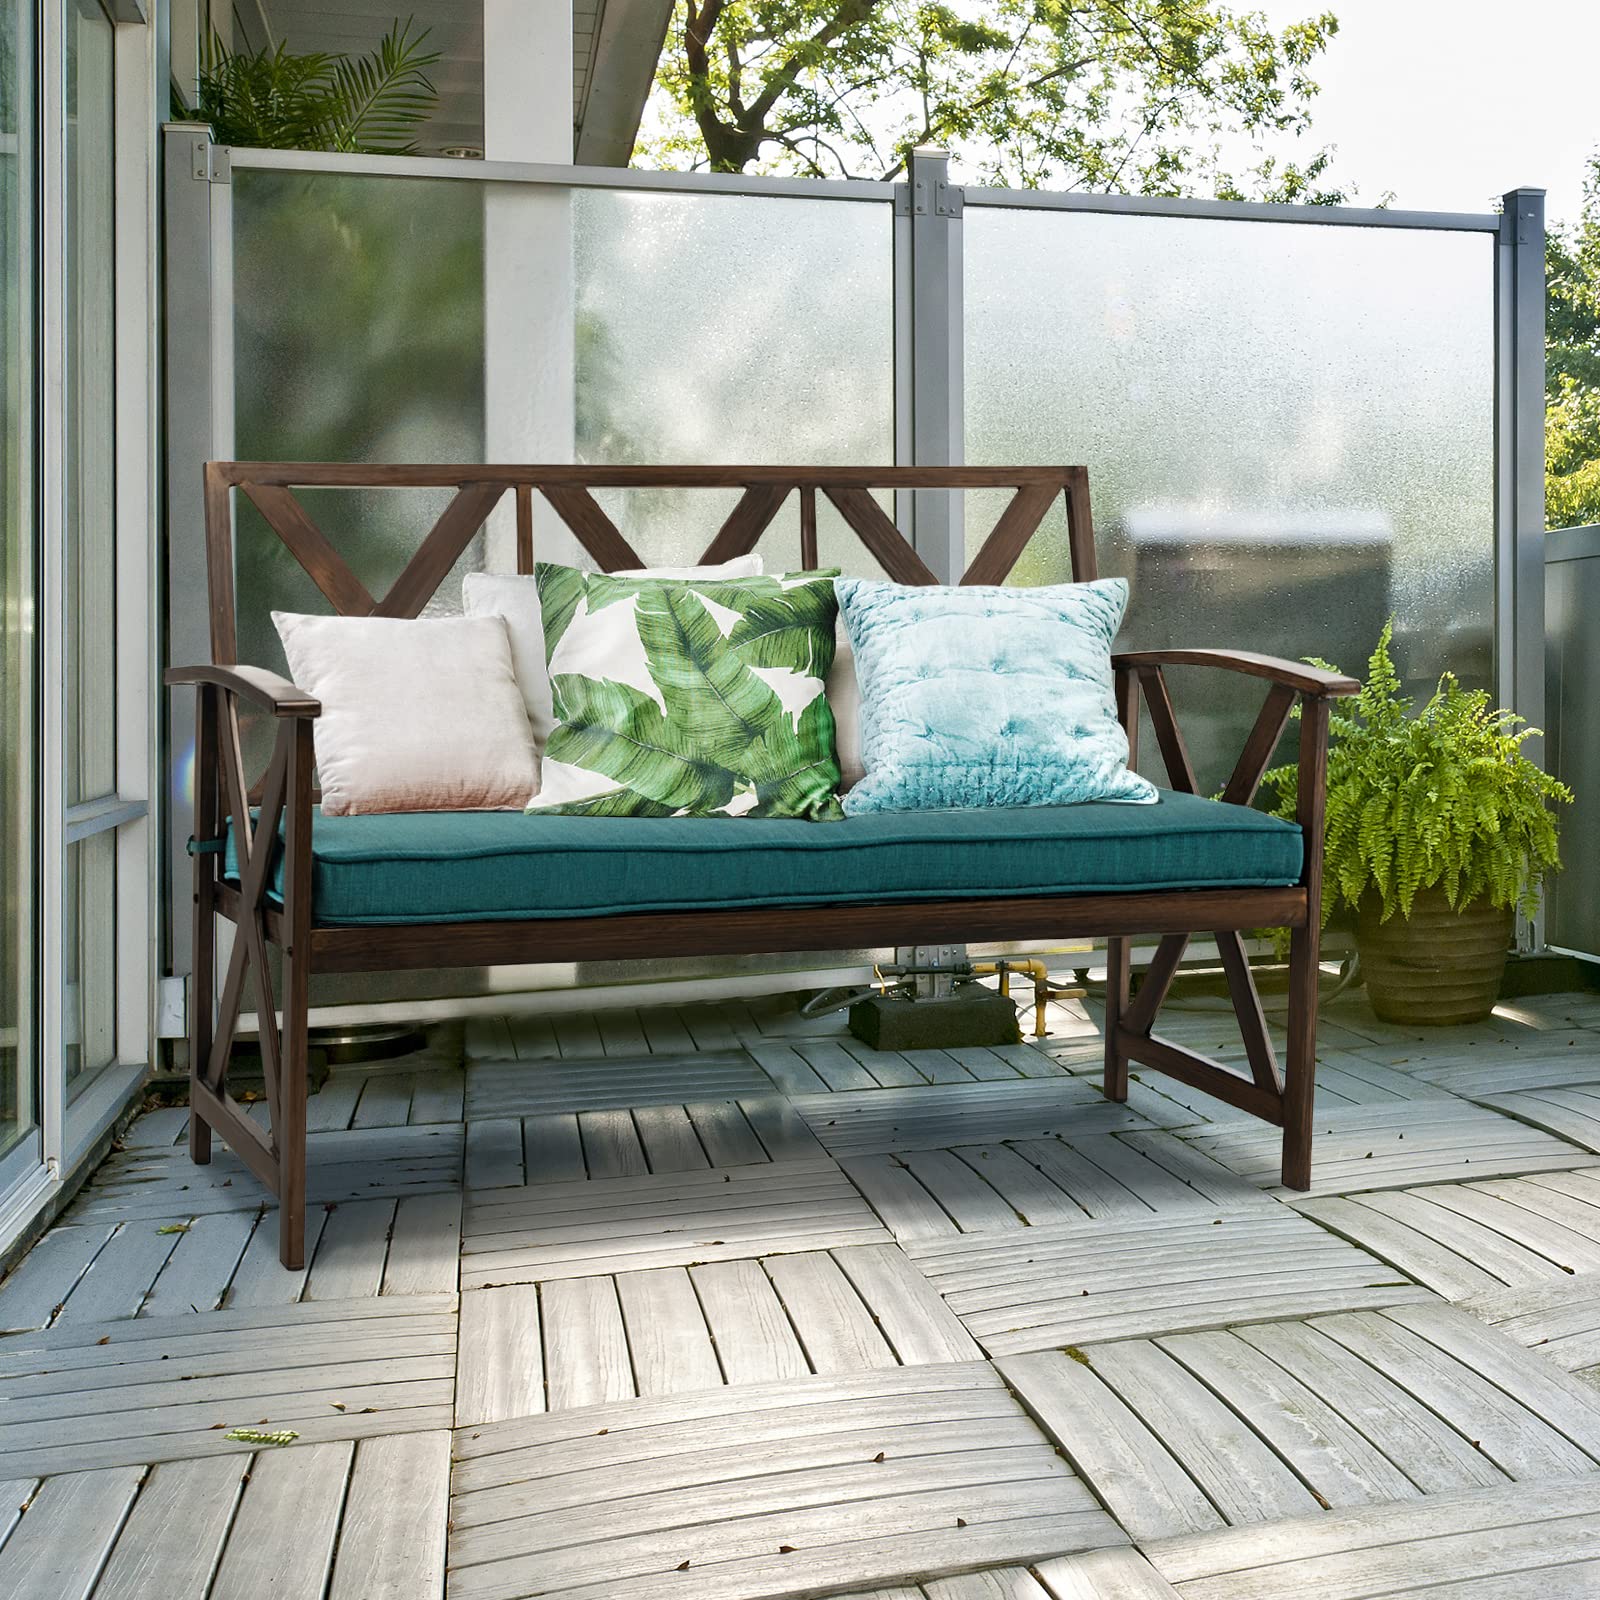 Giantex 51.5" Outdoor Garden Bench - Patio Chair with Heavy-Duty Wood Grain Coated Steel Frame